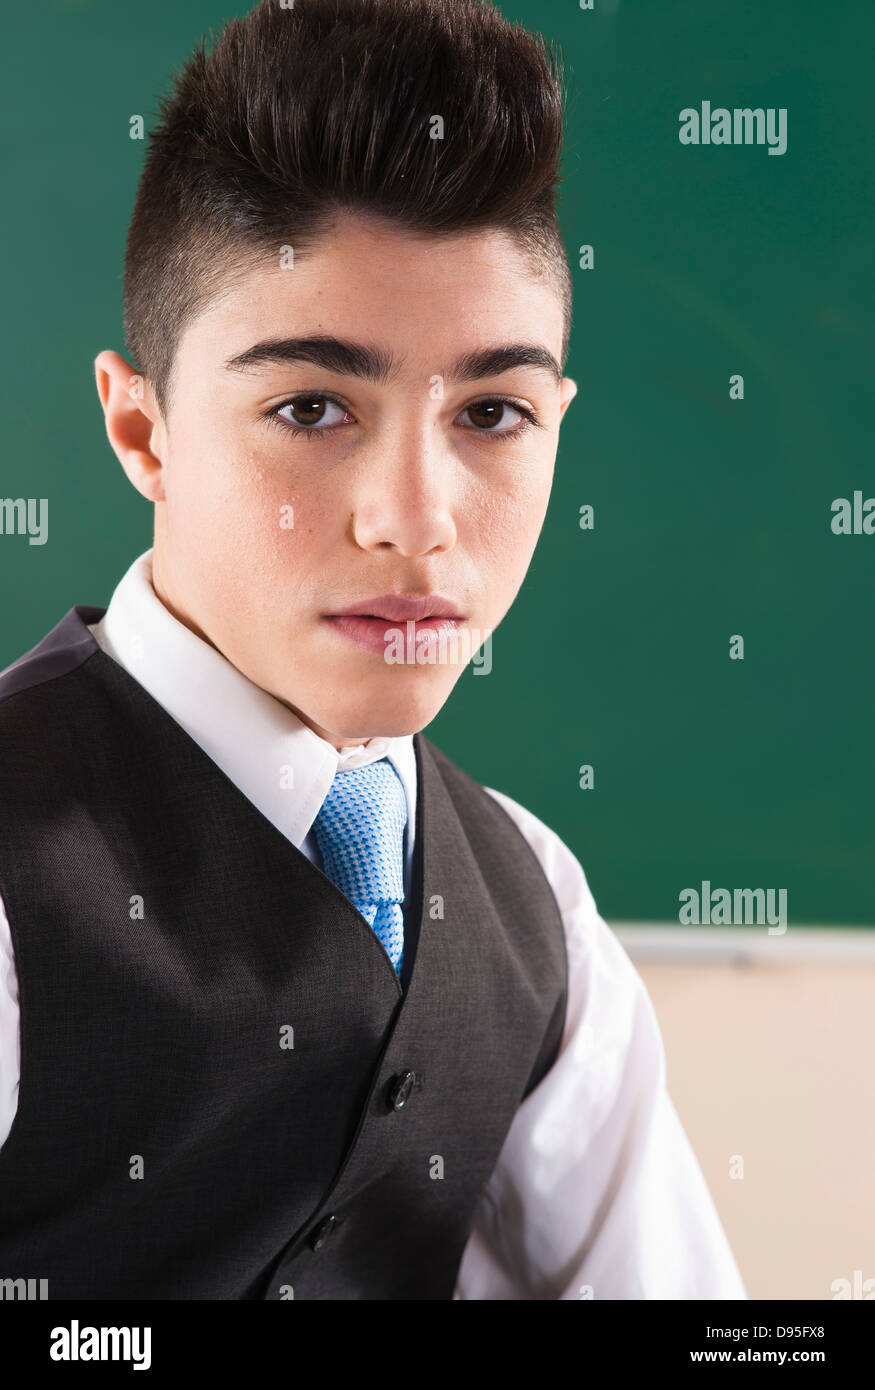 Head And Shoulders Portrait Of Boy In Front Of Chalkboard In Classroom